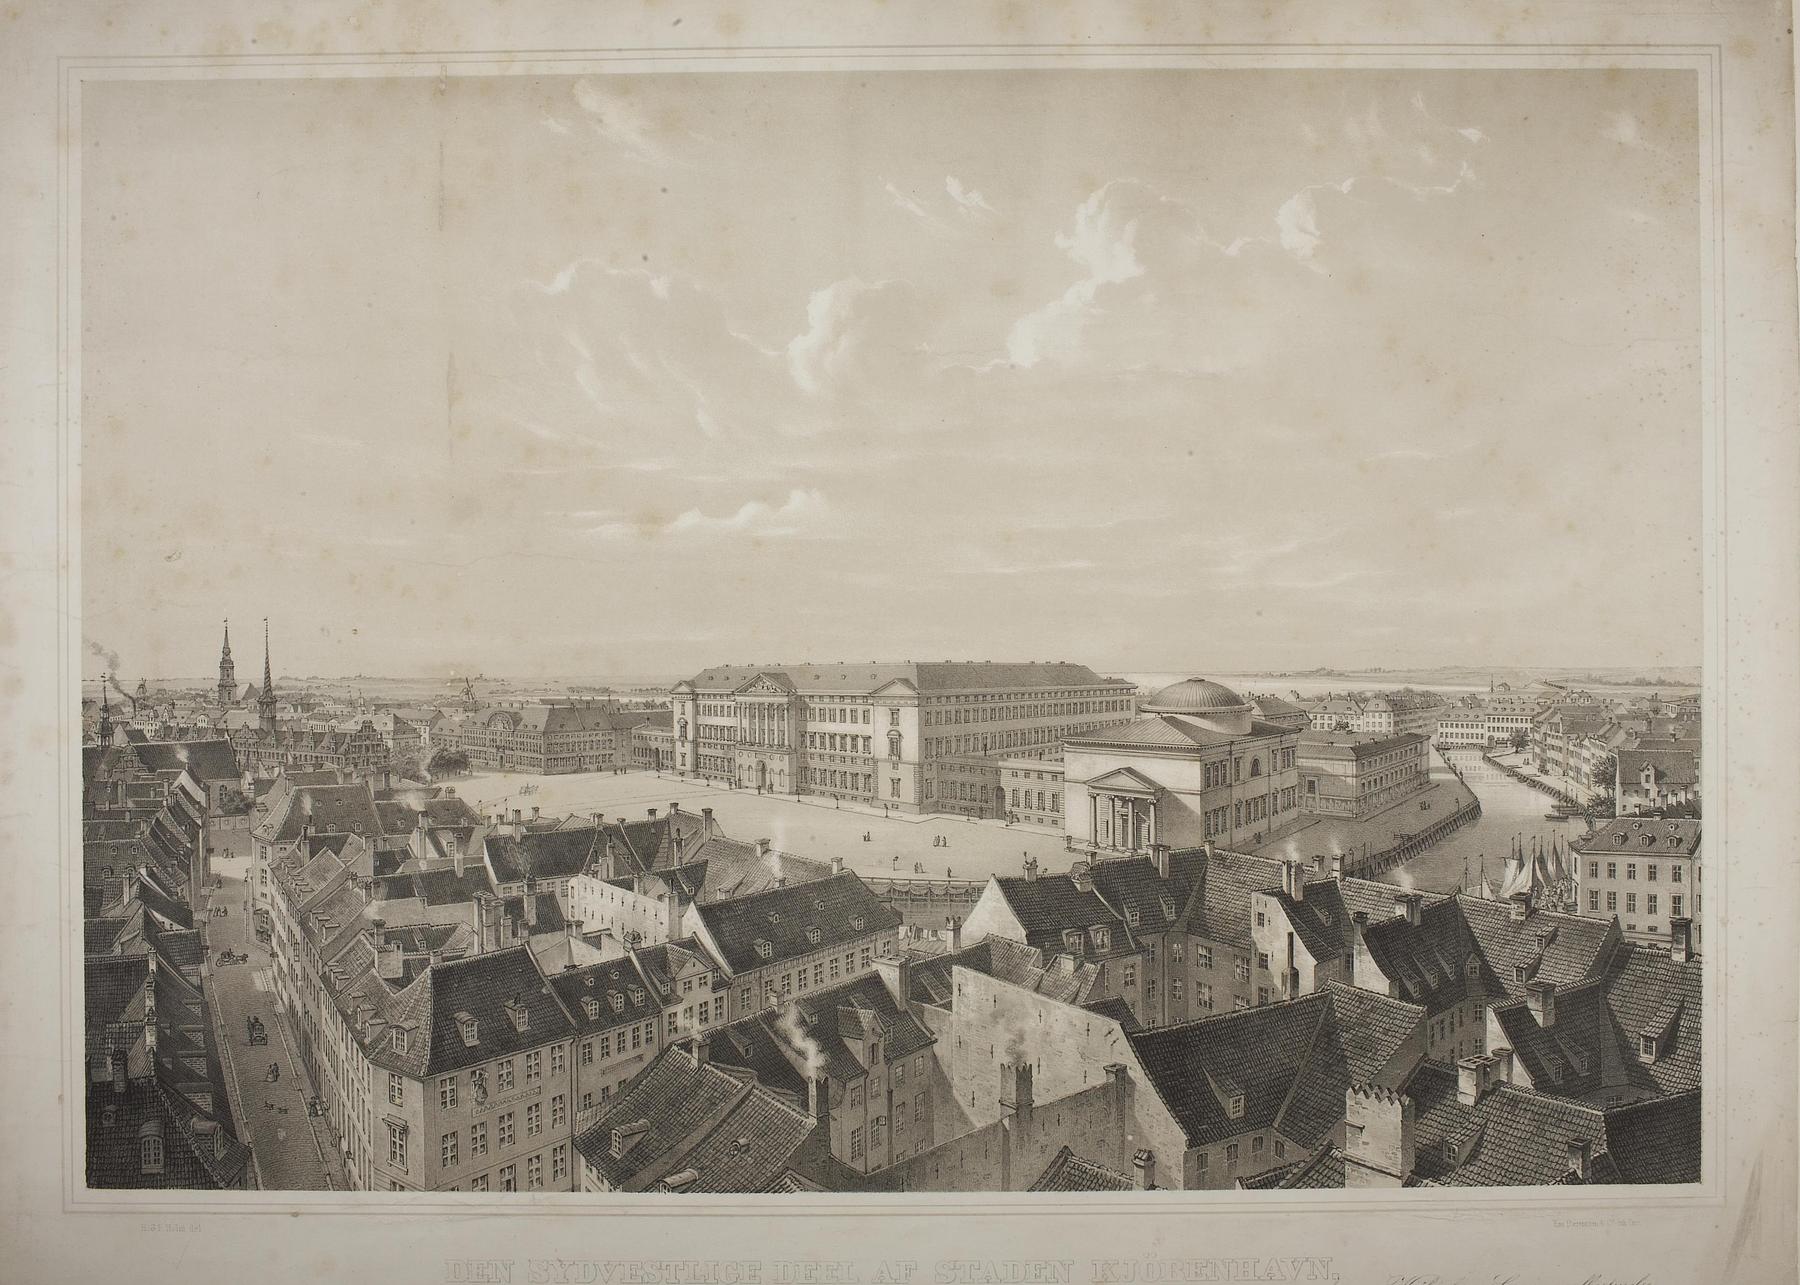 View from the Tower of Nikolaj Church towards Christiansborg Palace, E2289